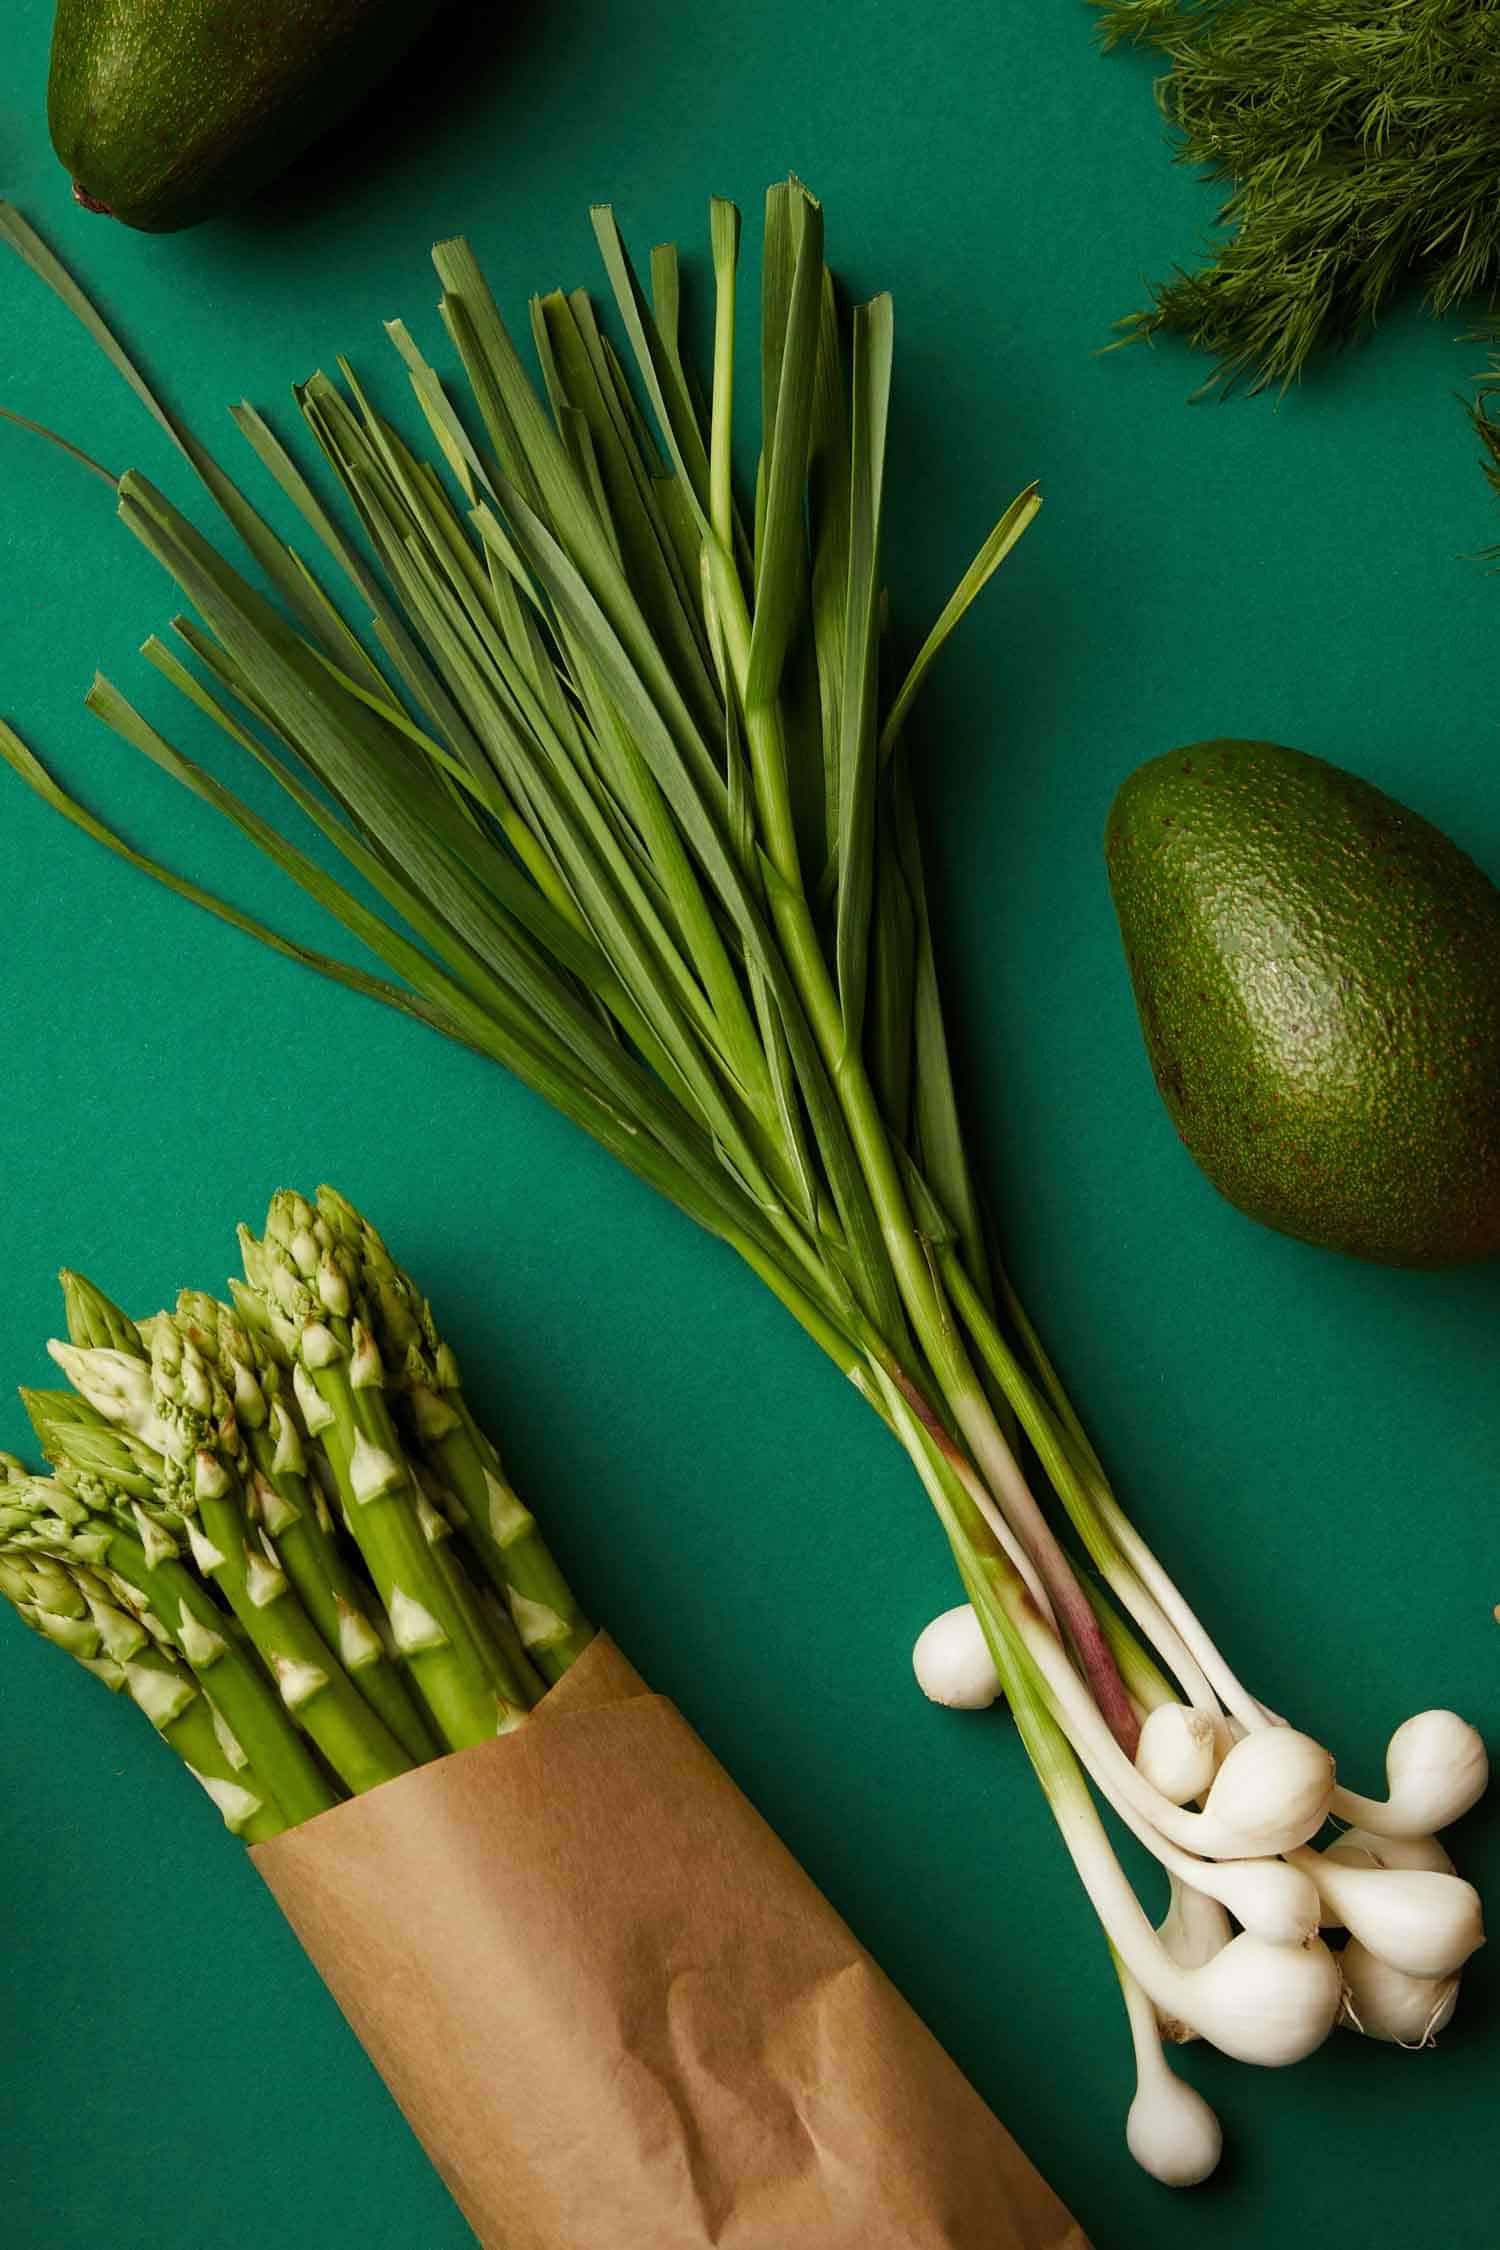 Green garlic on a green background alongside asparagus and avocado